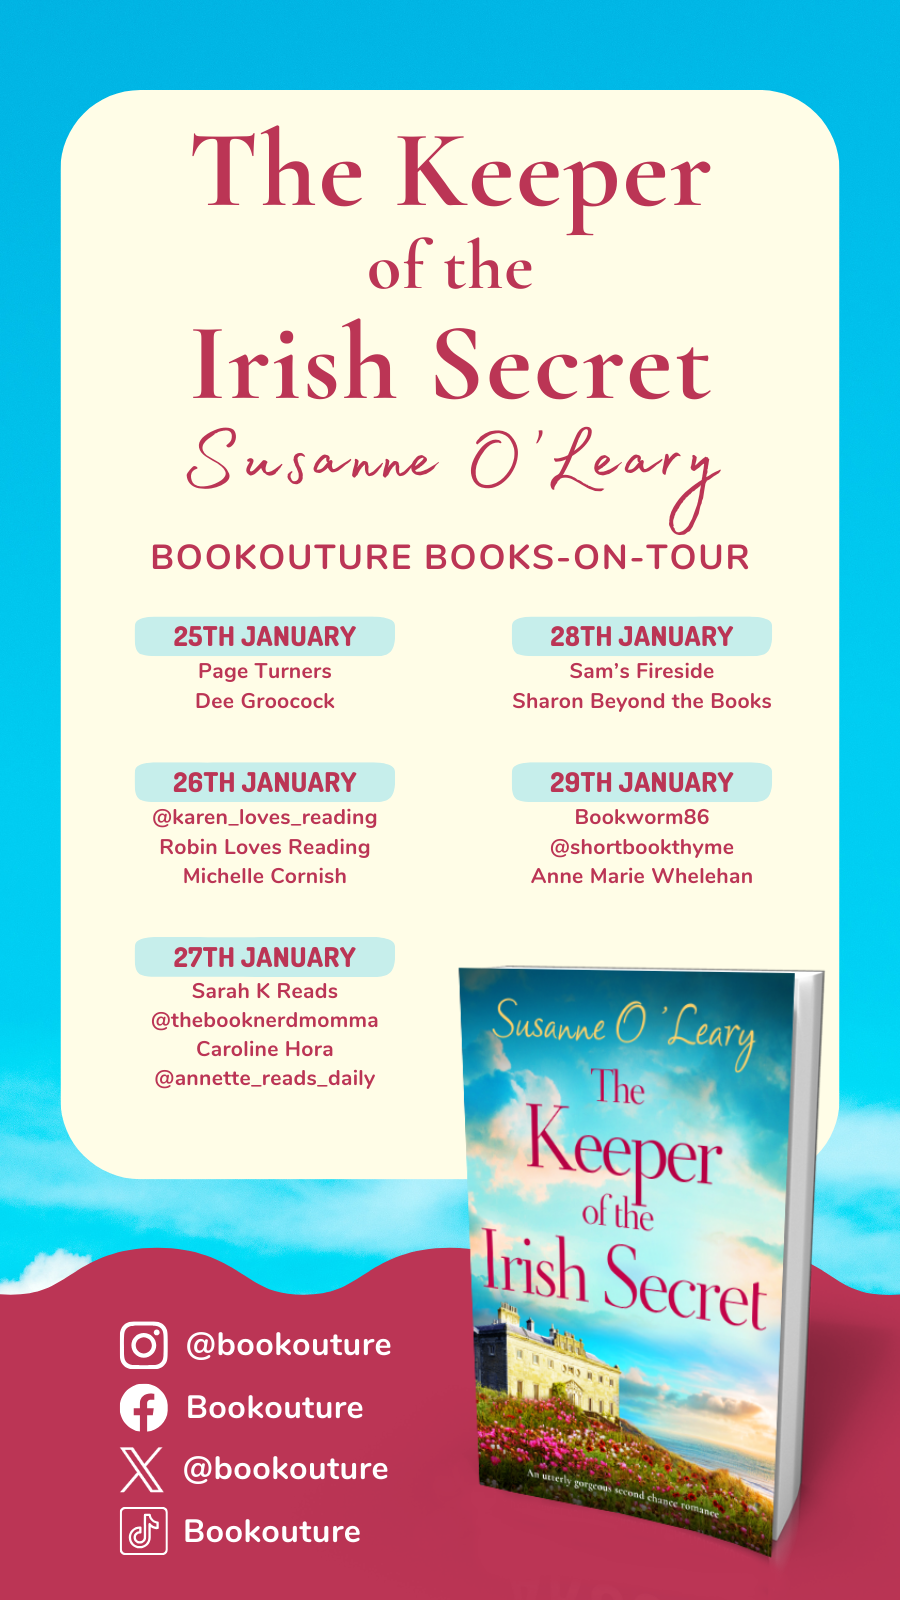 The Keeper of the Irish Secret Blog Tour